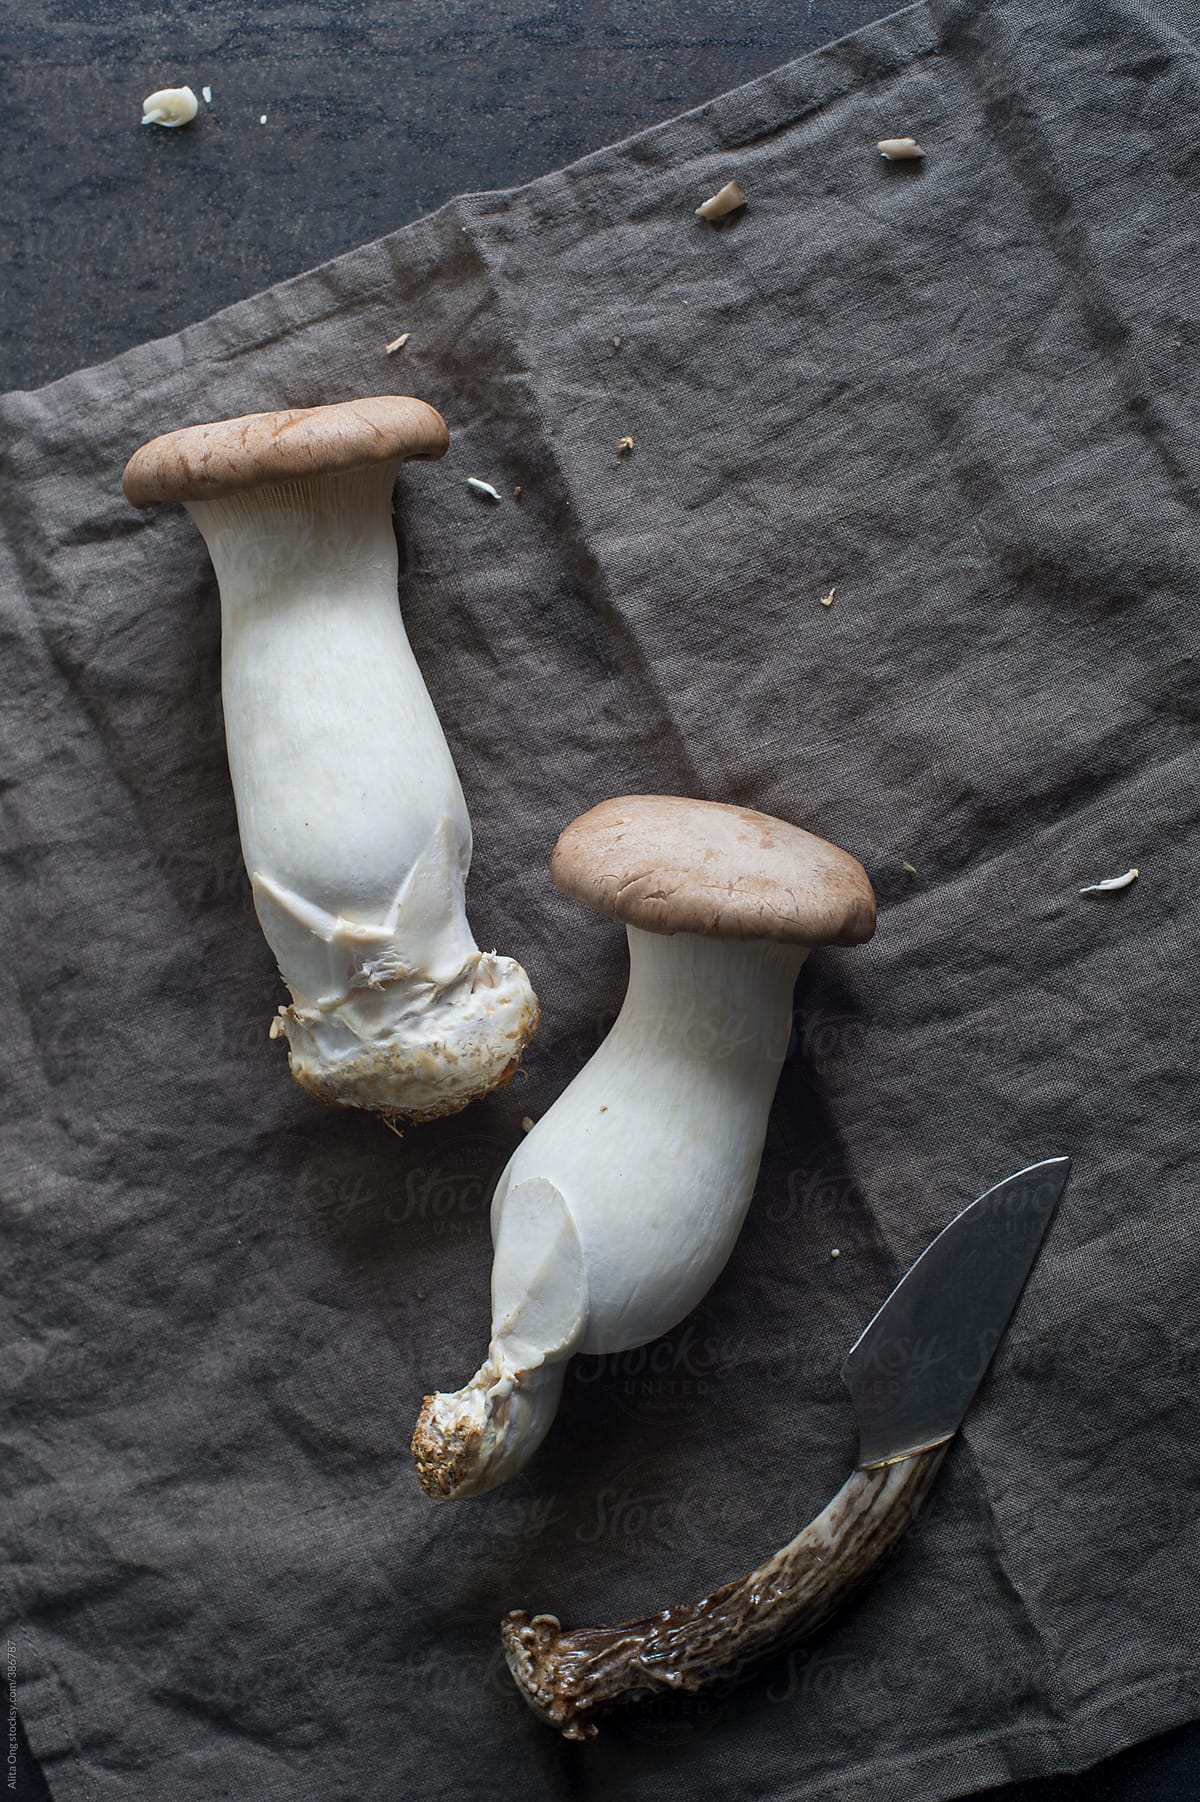 "King Oyster Mushroom" by Stocksy Contributor "Alita ." - Stocksy